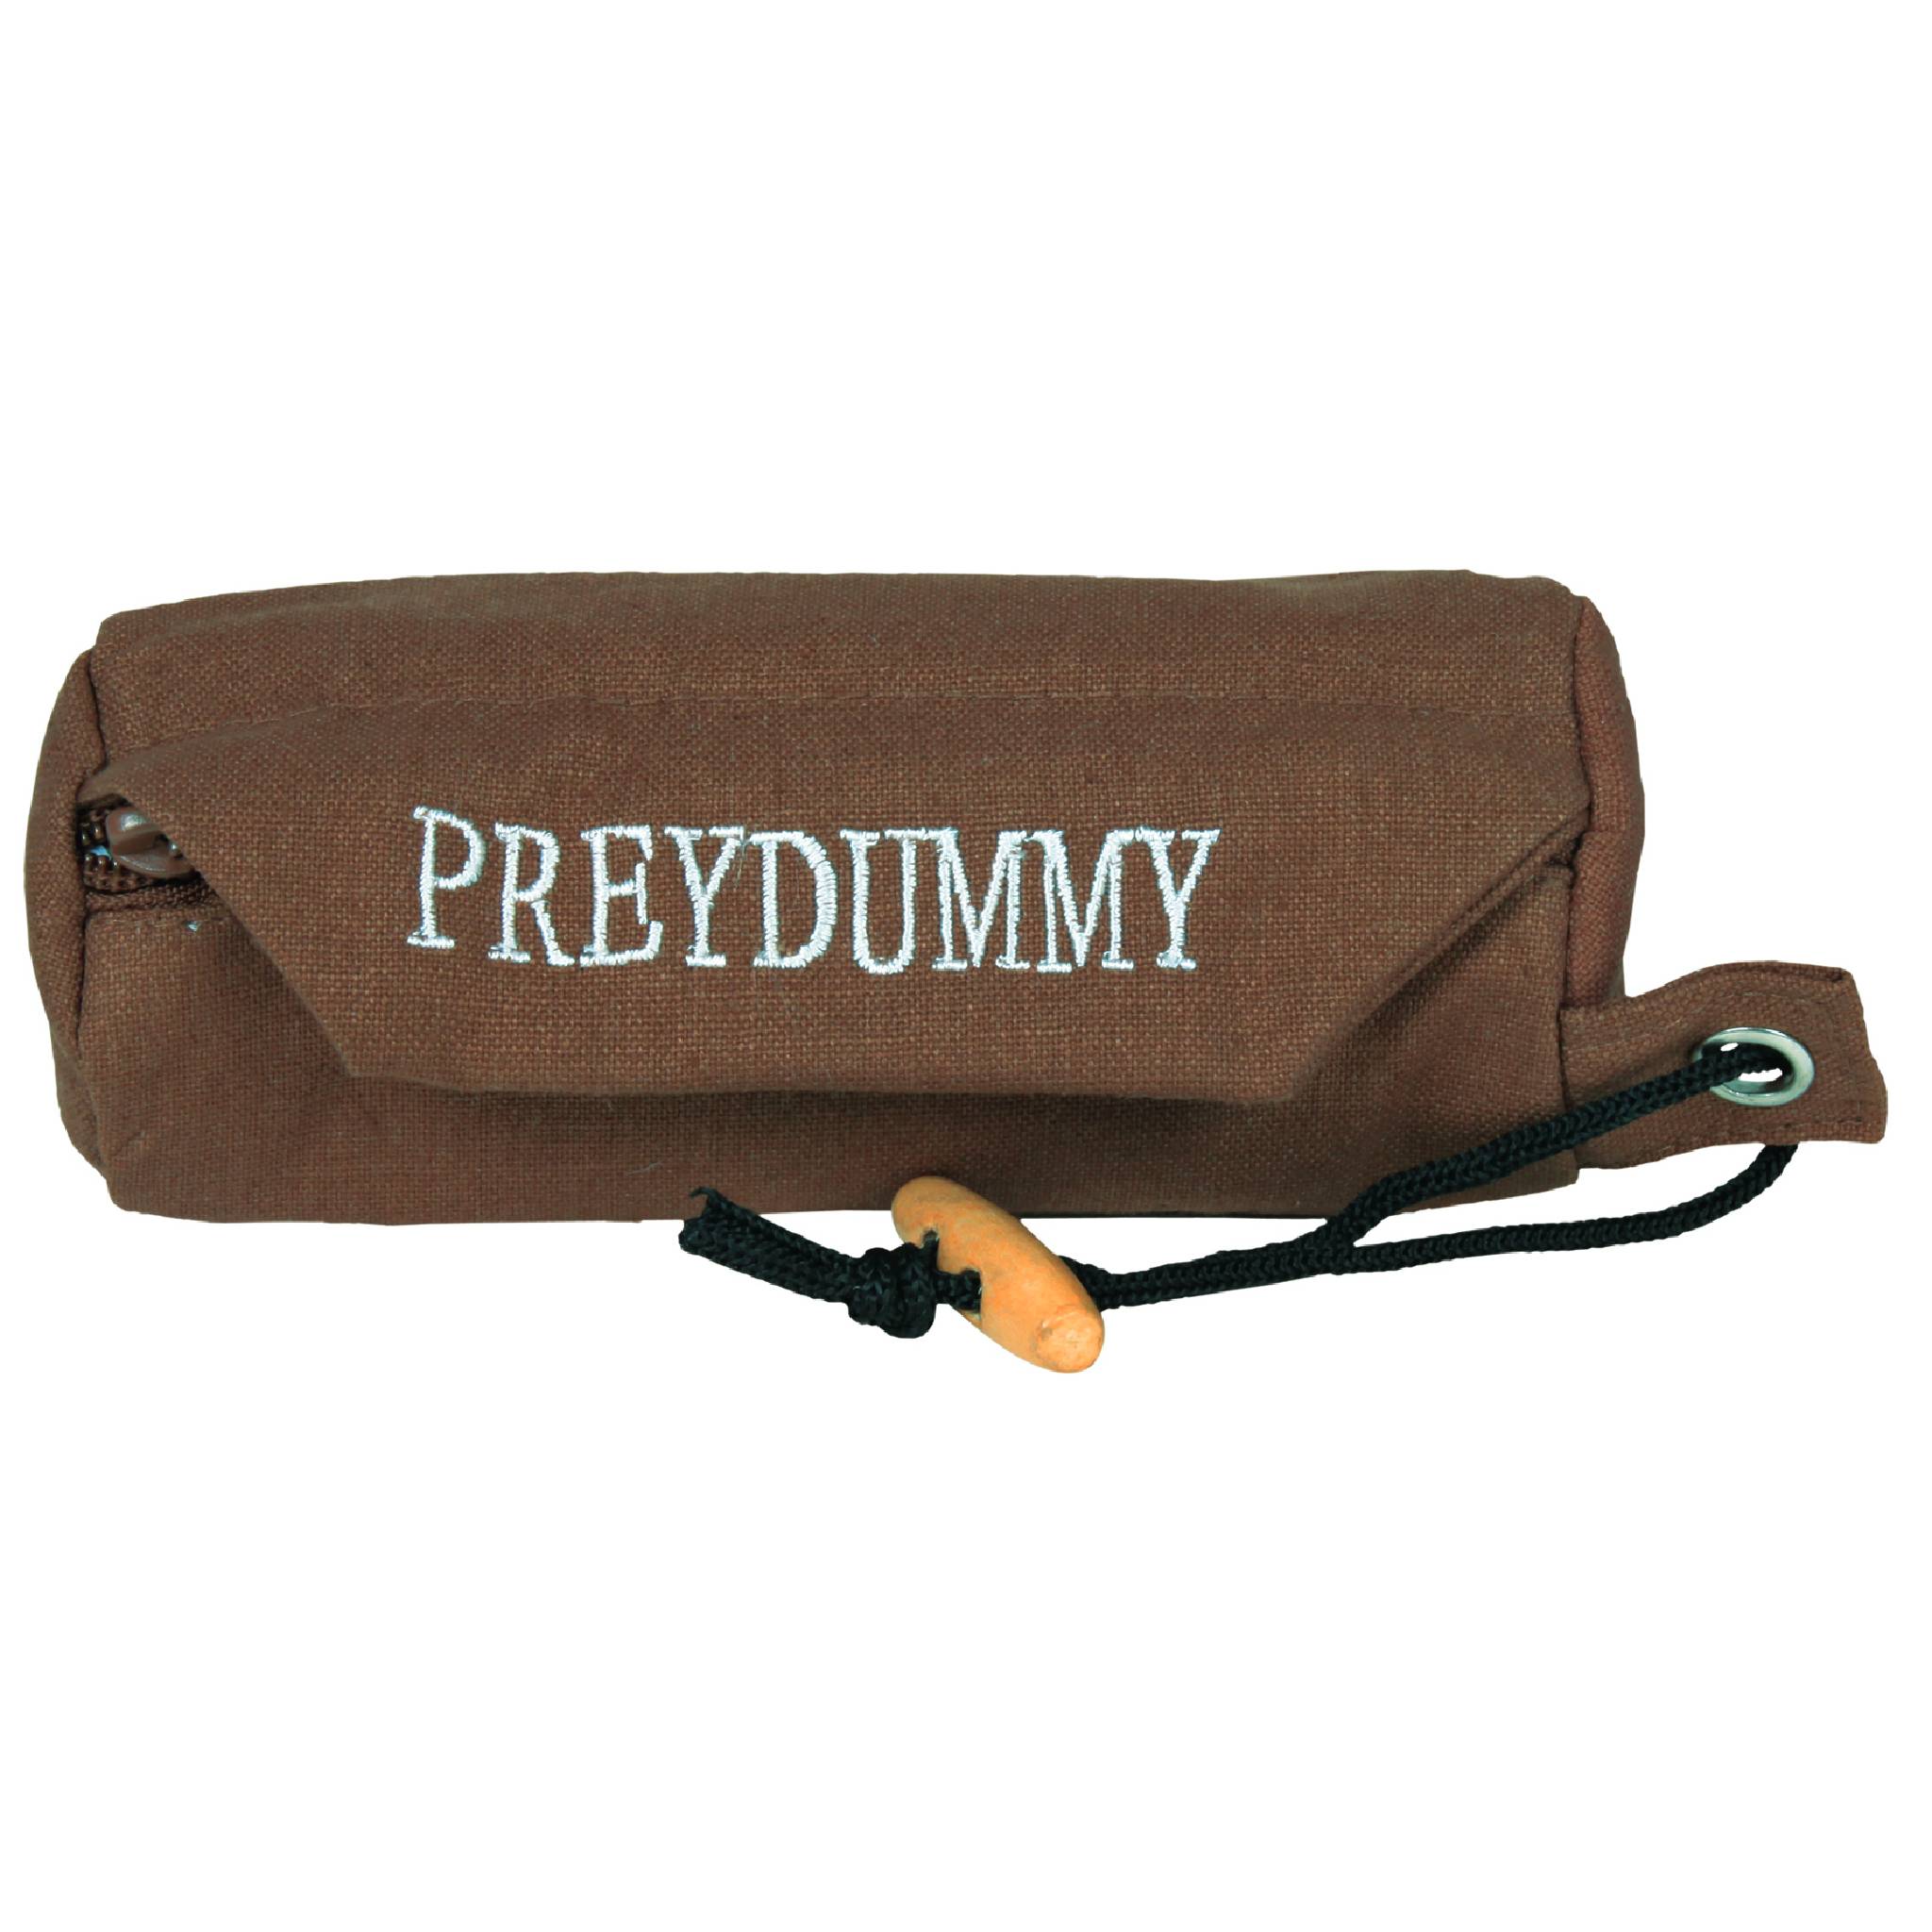 Prey Dummy - Pack of 2